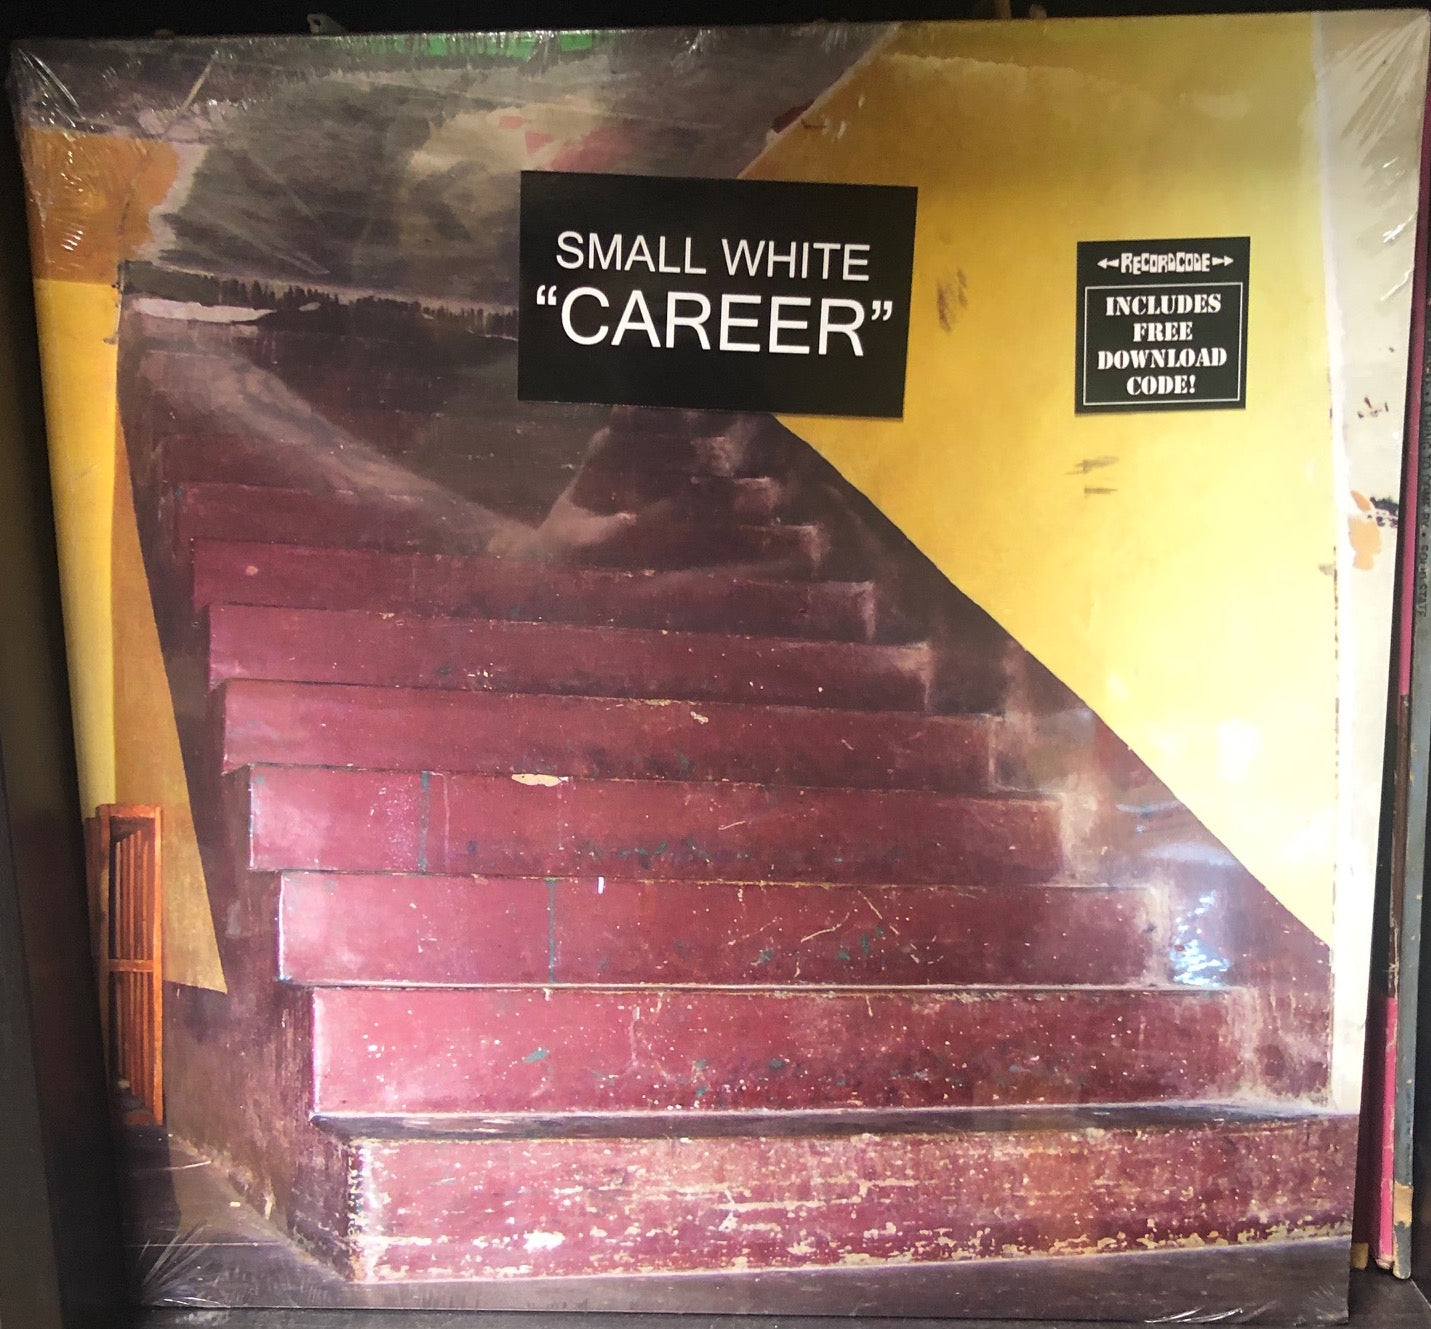 Small White - Career - New LP Record 2011 USA Vinyl & Download - Minneapolis Rock